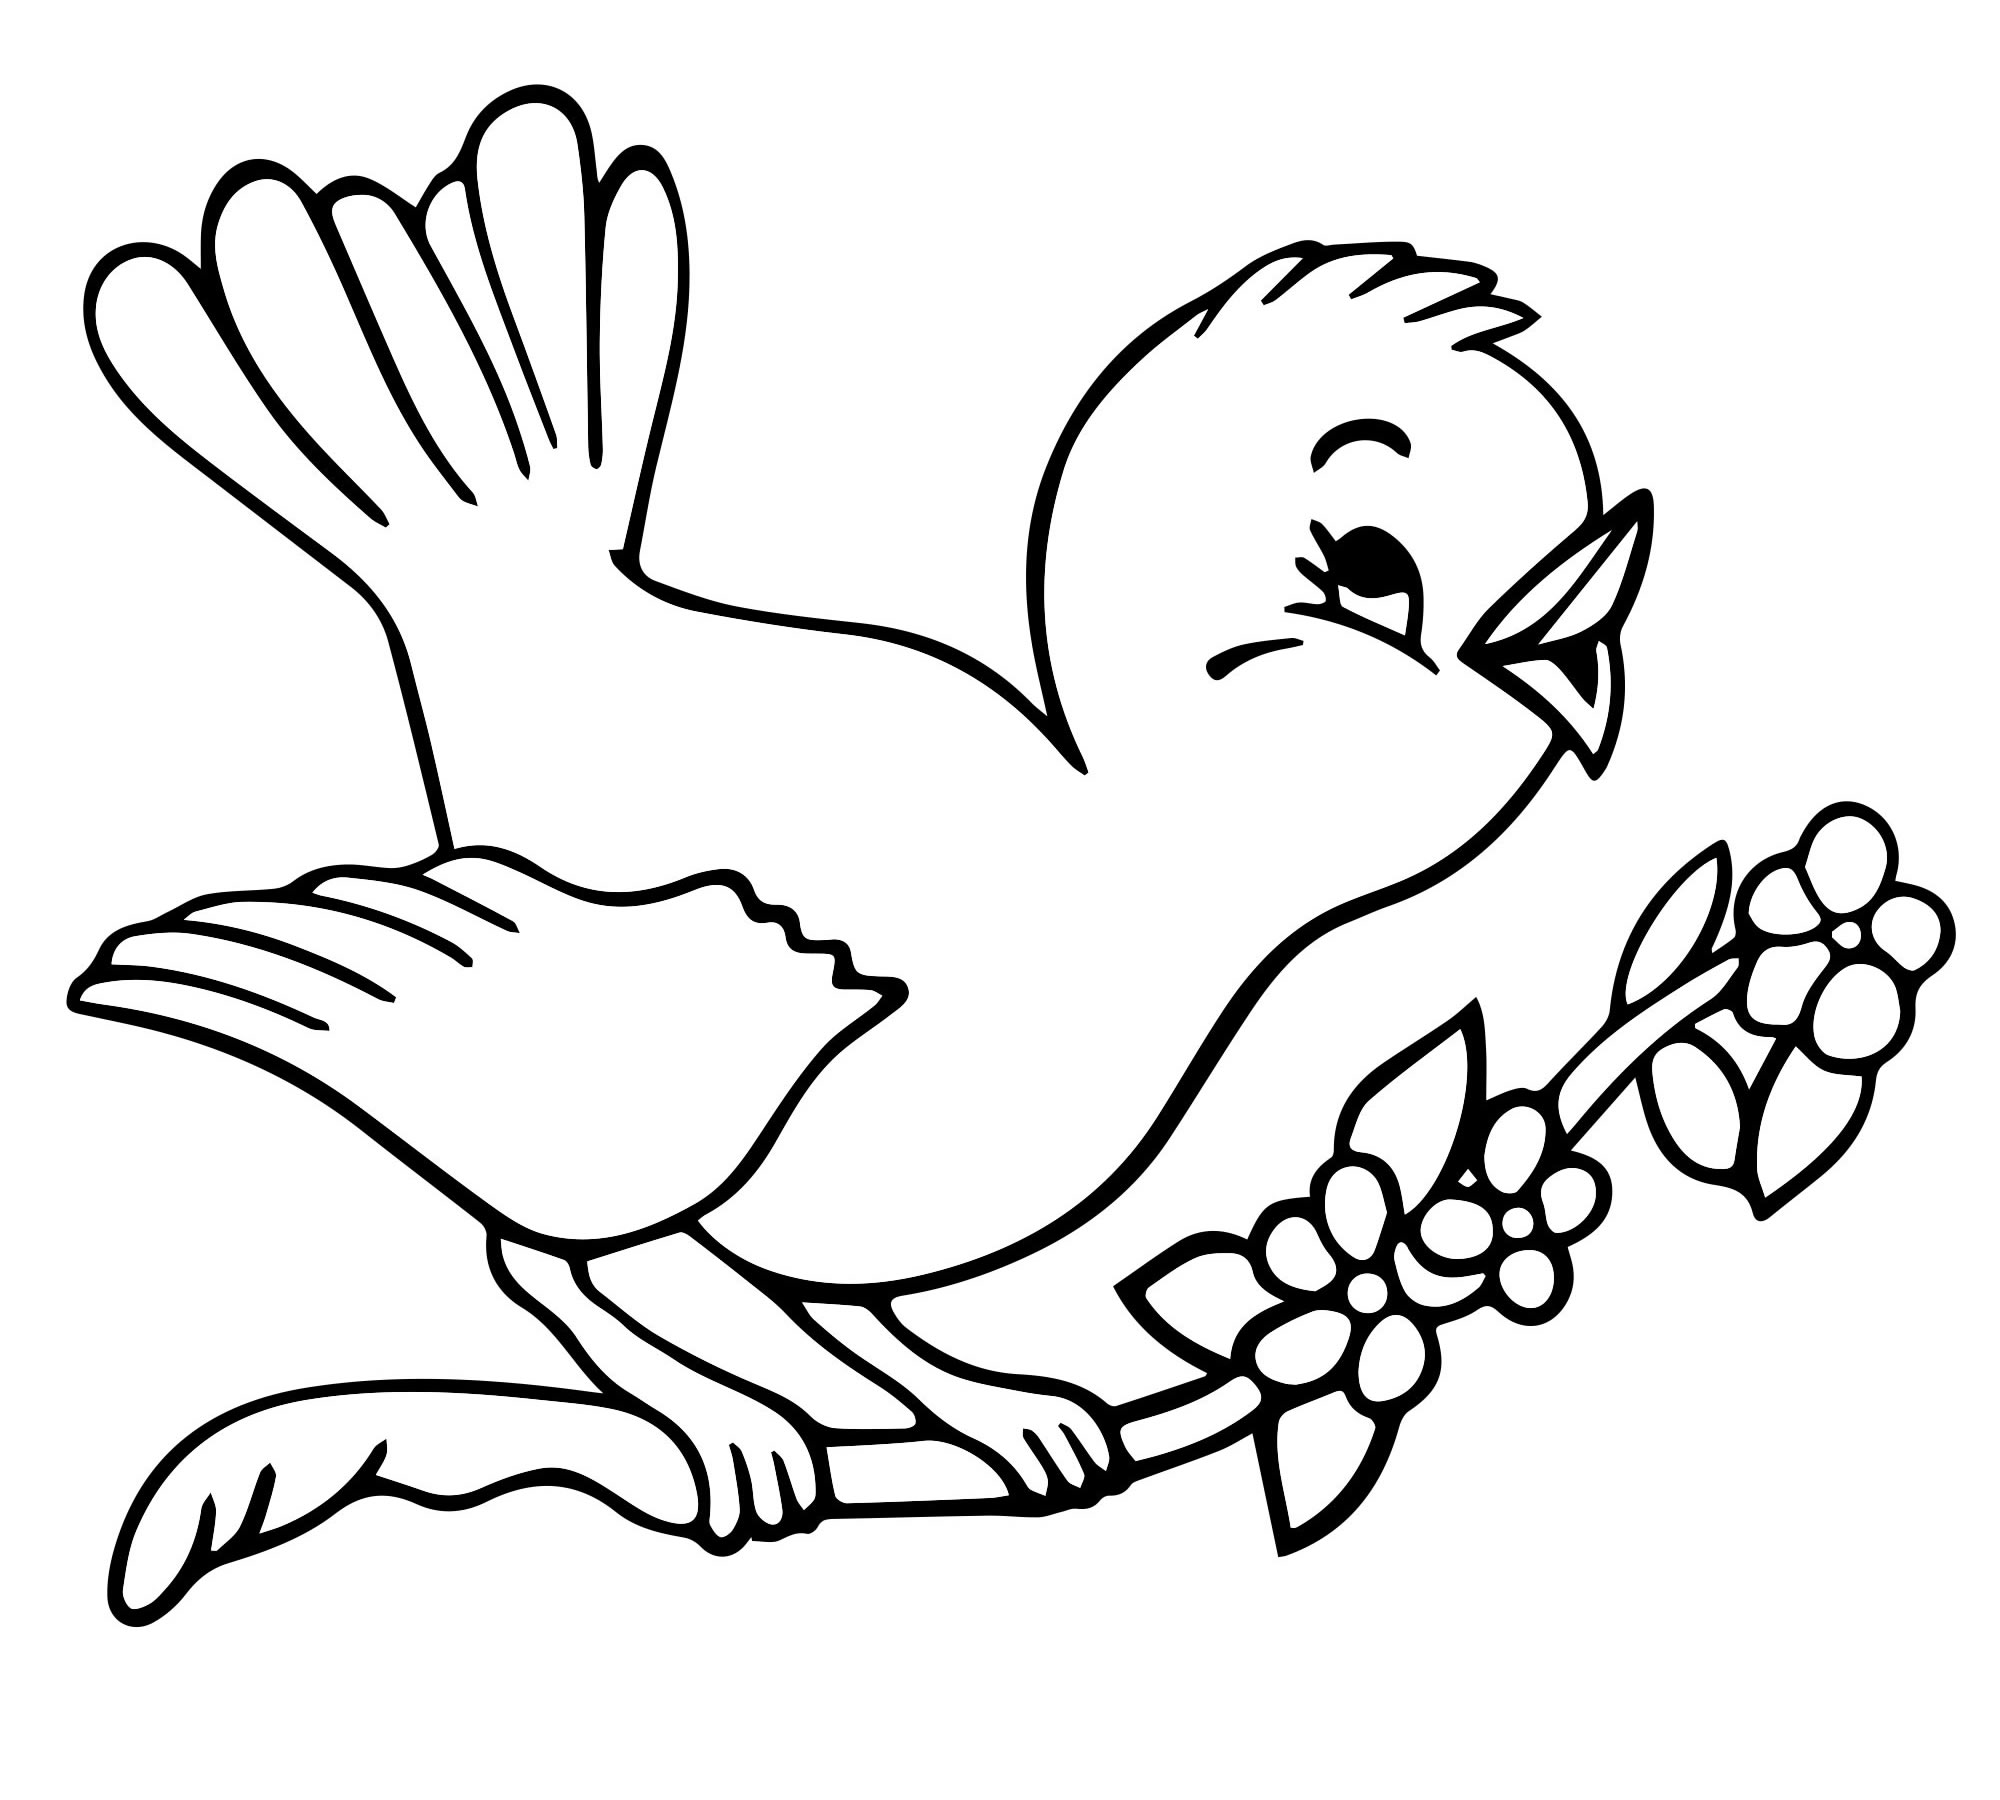 Страница раскраски птиц, вектор птиц, белая и черная птица, раскраски птиц для детей